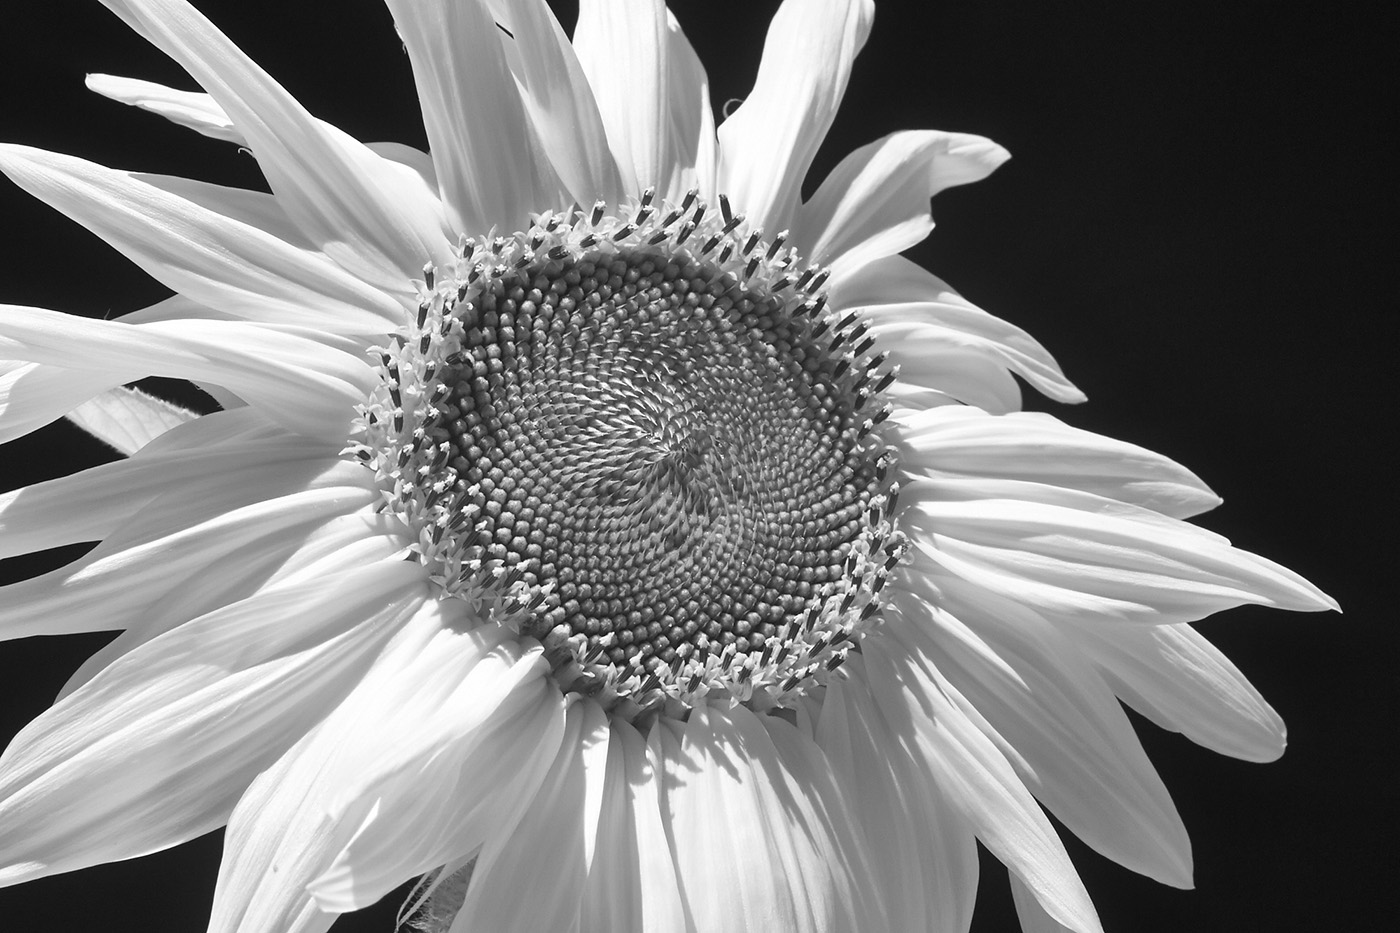 Sunflower, Hamilton, New York